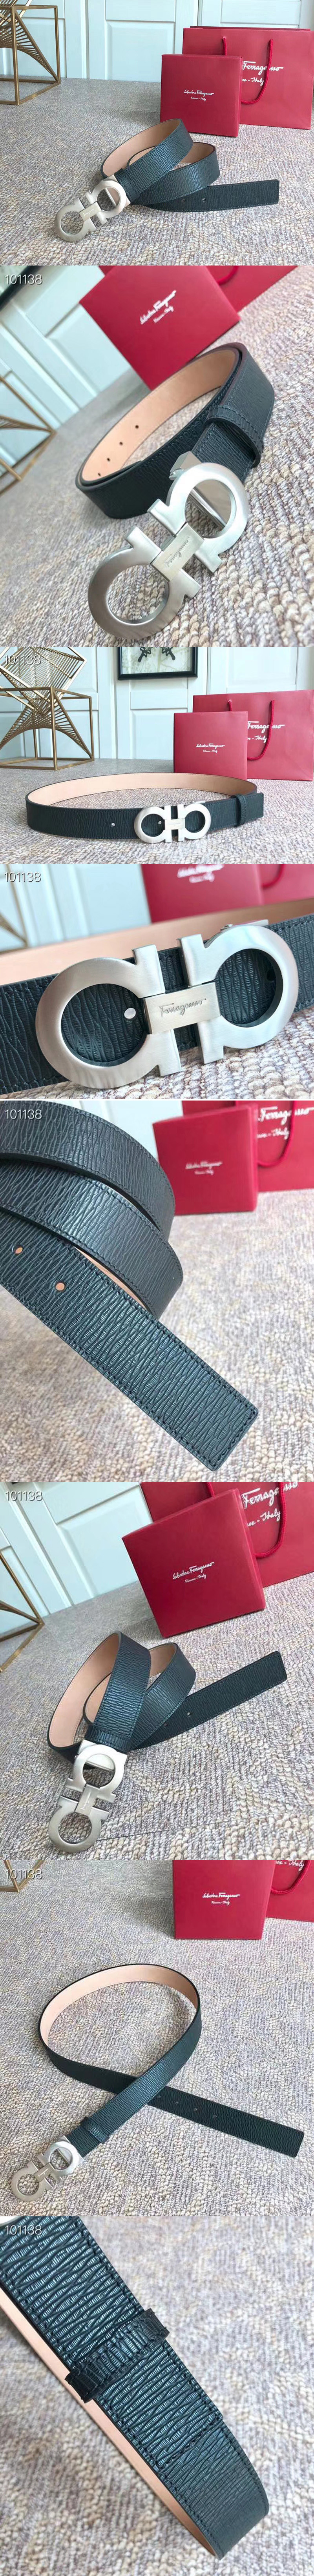 Replica Ferragamo Belts